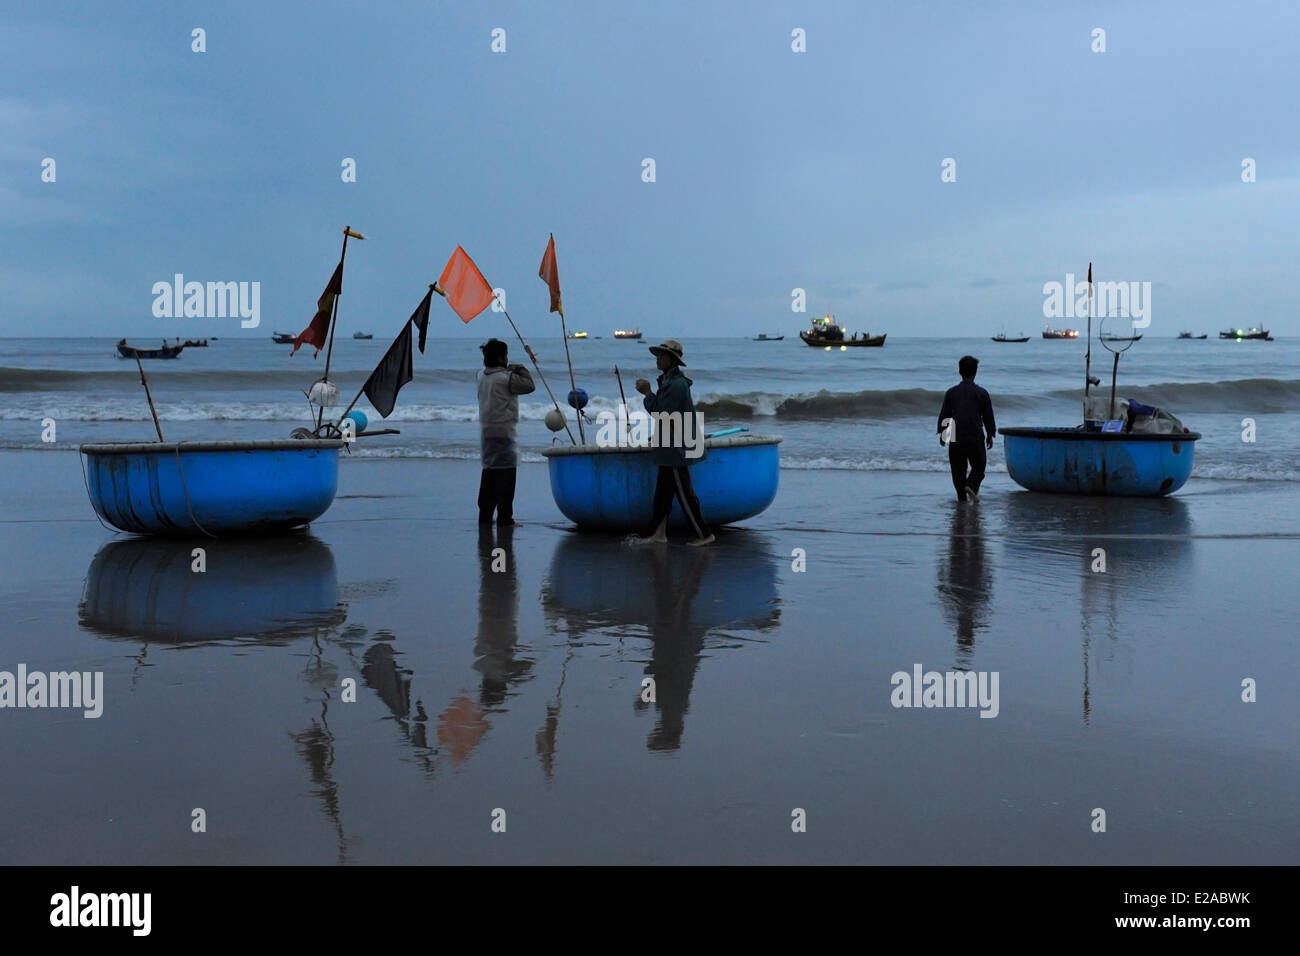 Vietnam, Ba Ria Vung Tau Province, Long Hai, unloading fishing boats on the beach Stock Photo